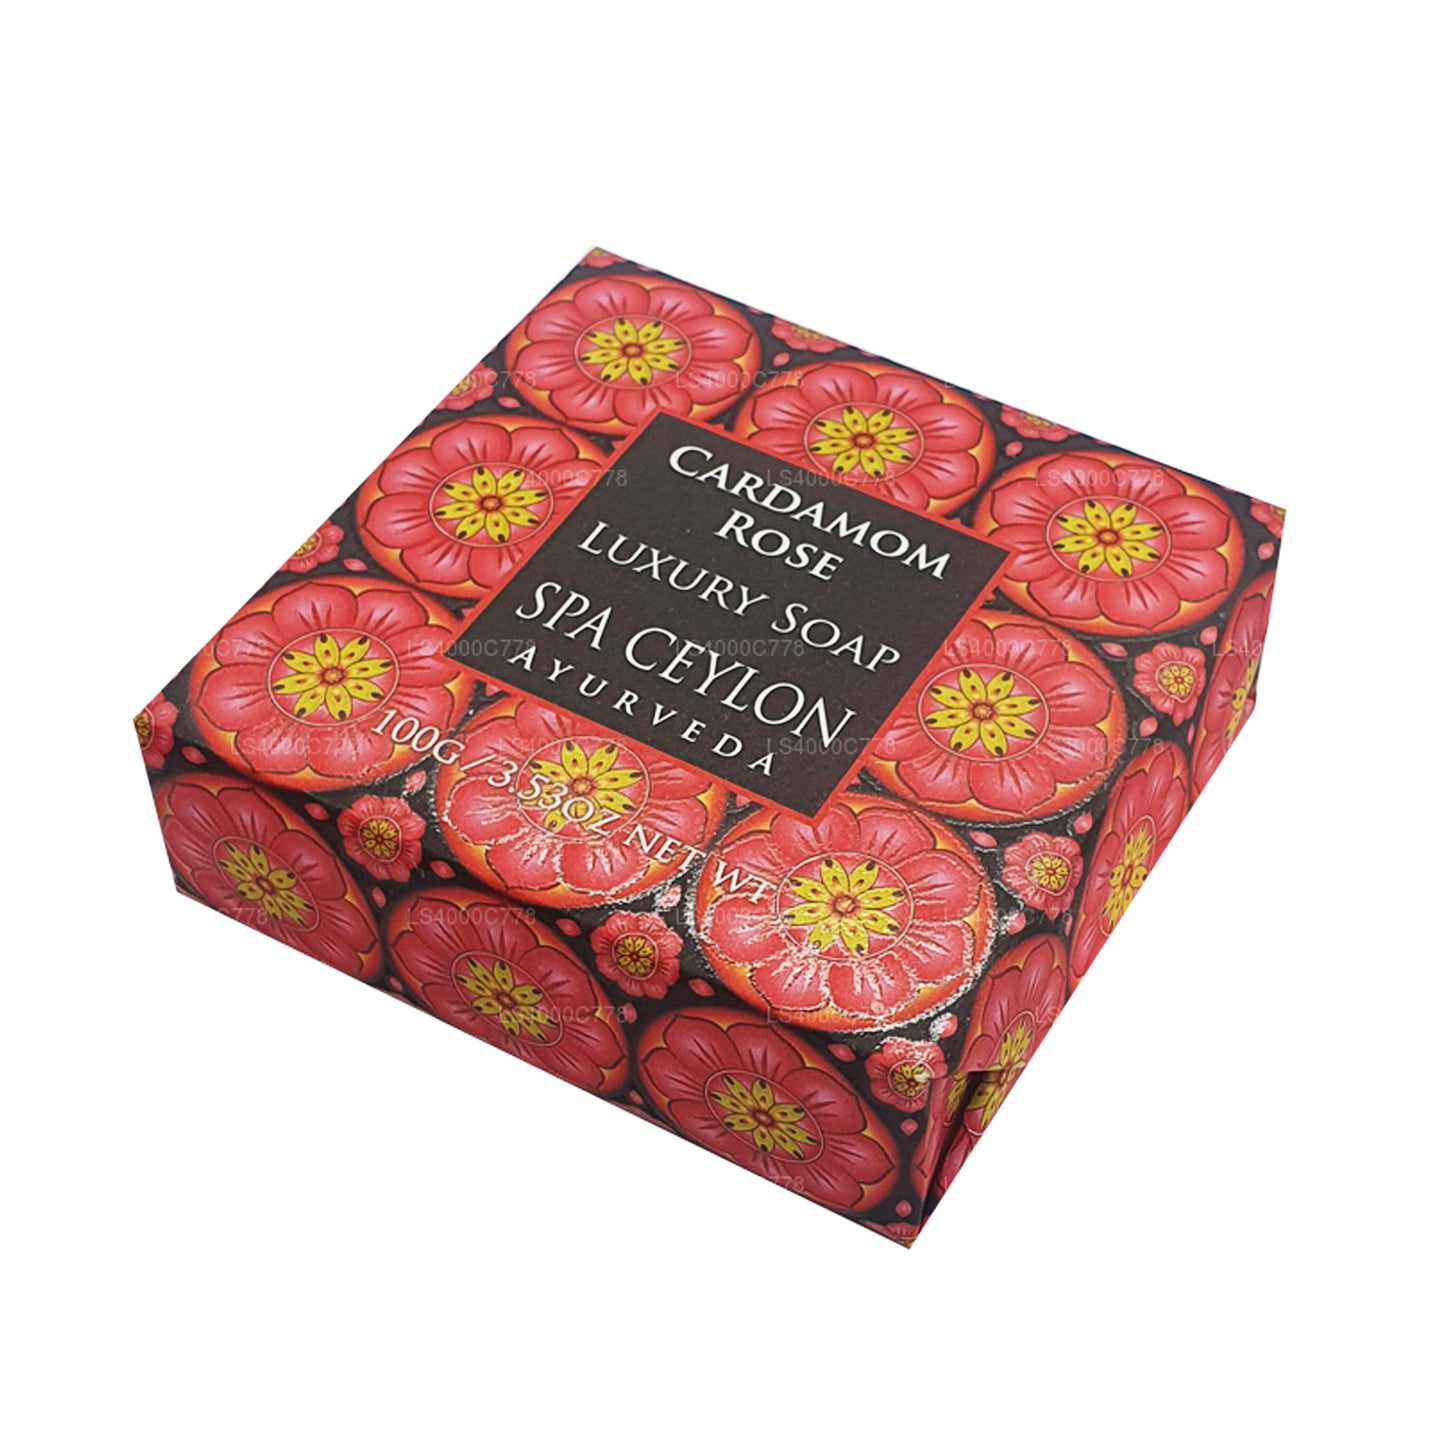 Spa Ceylon Cardamom Rose Luxusseife (100 g)